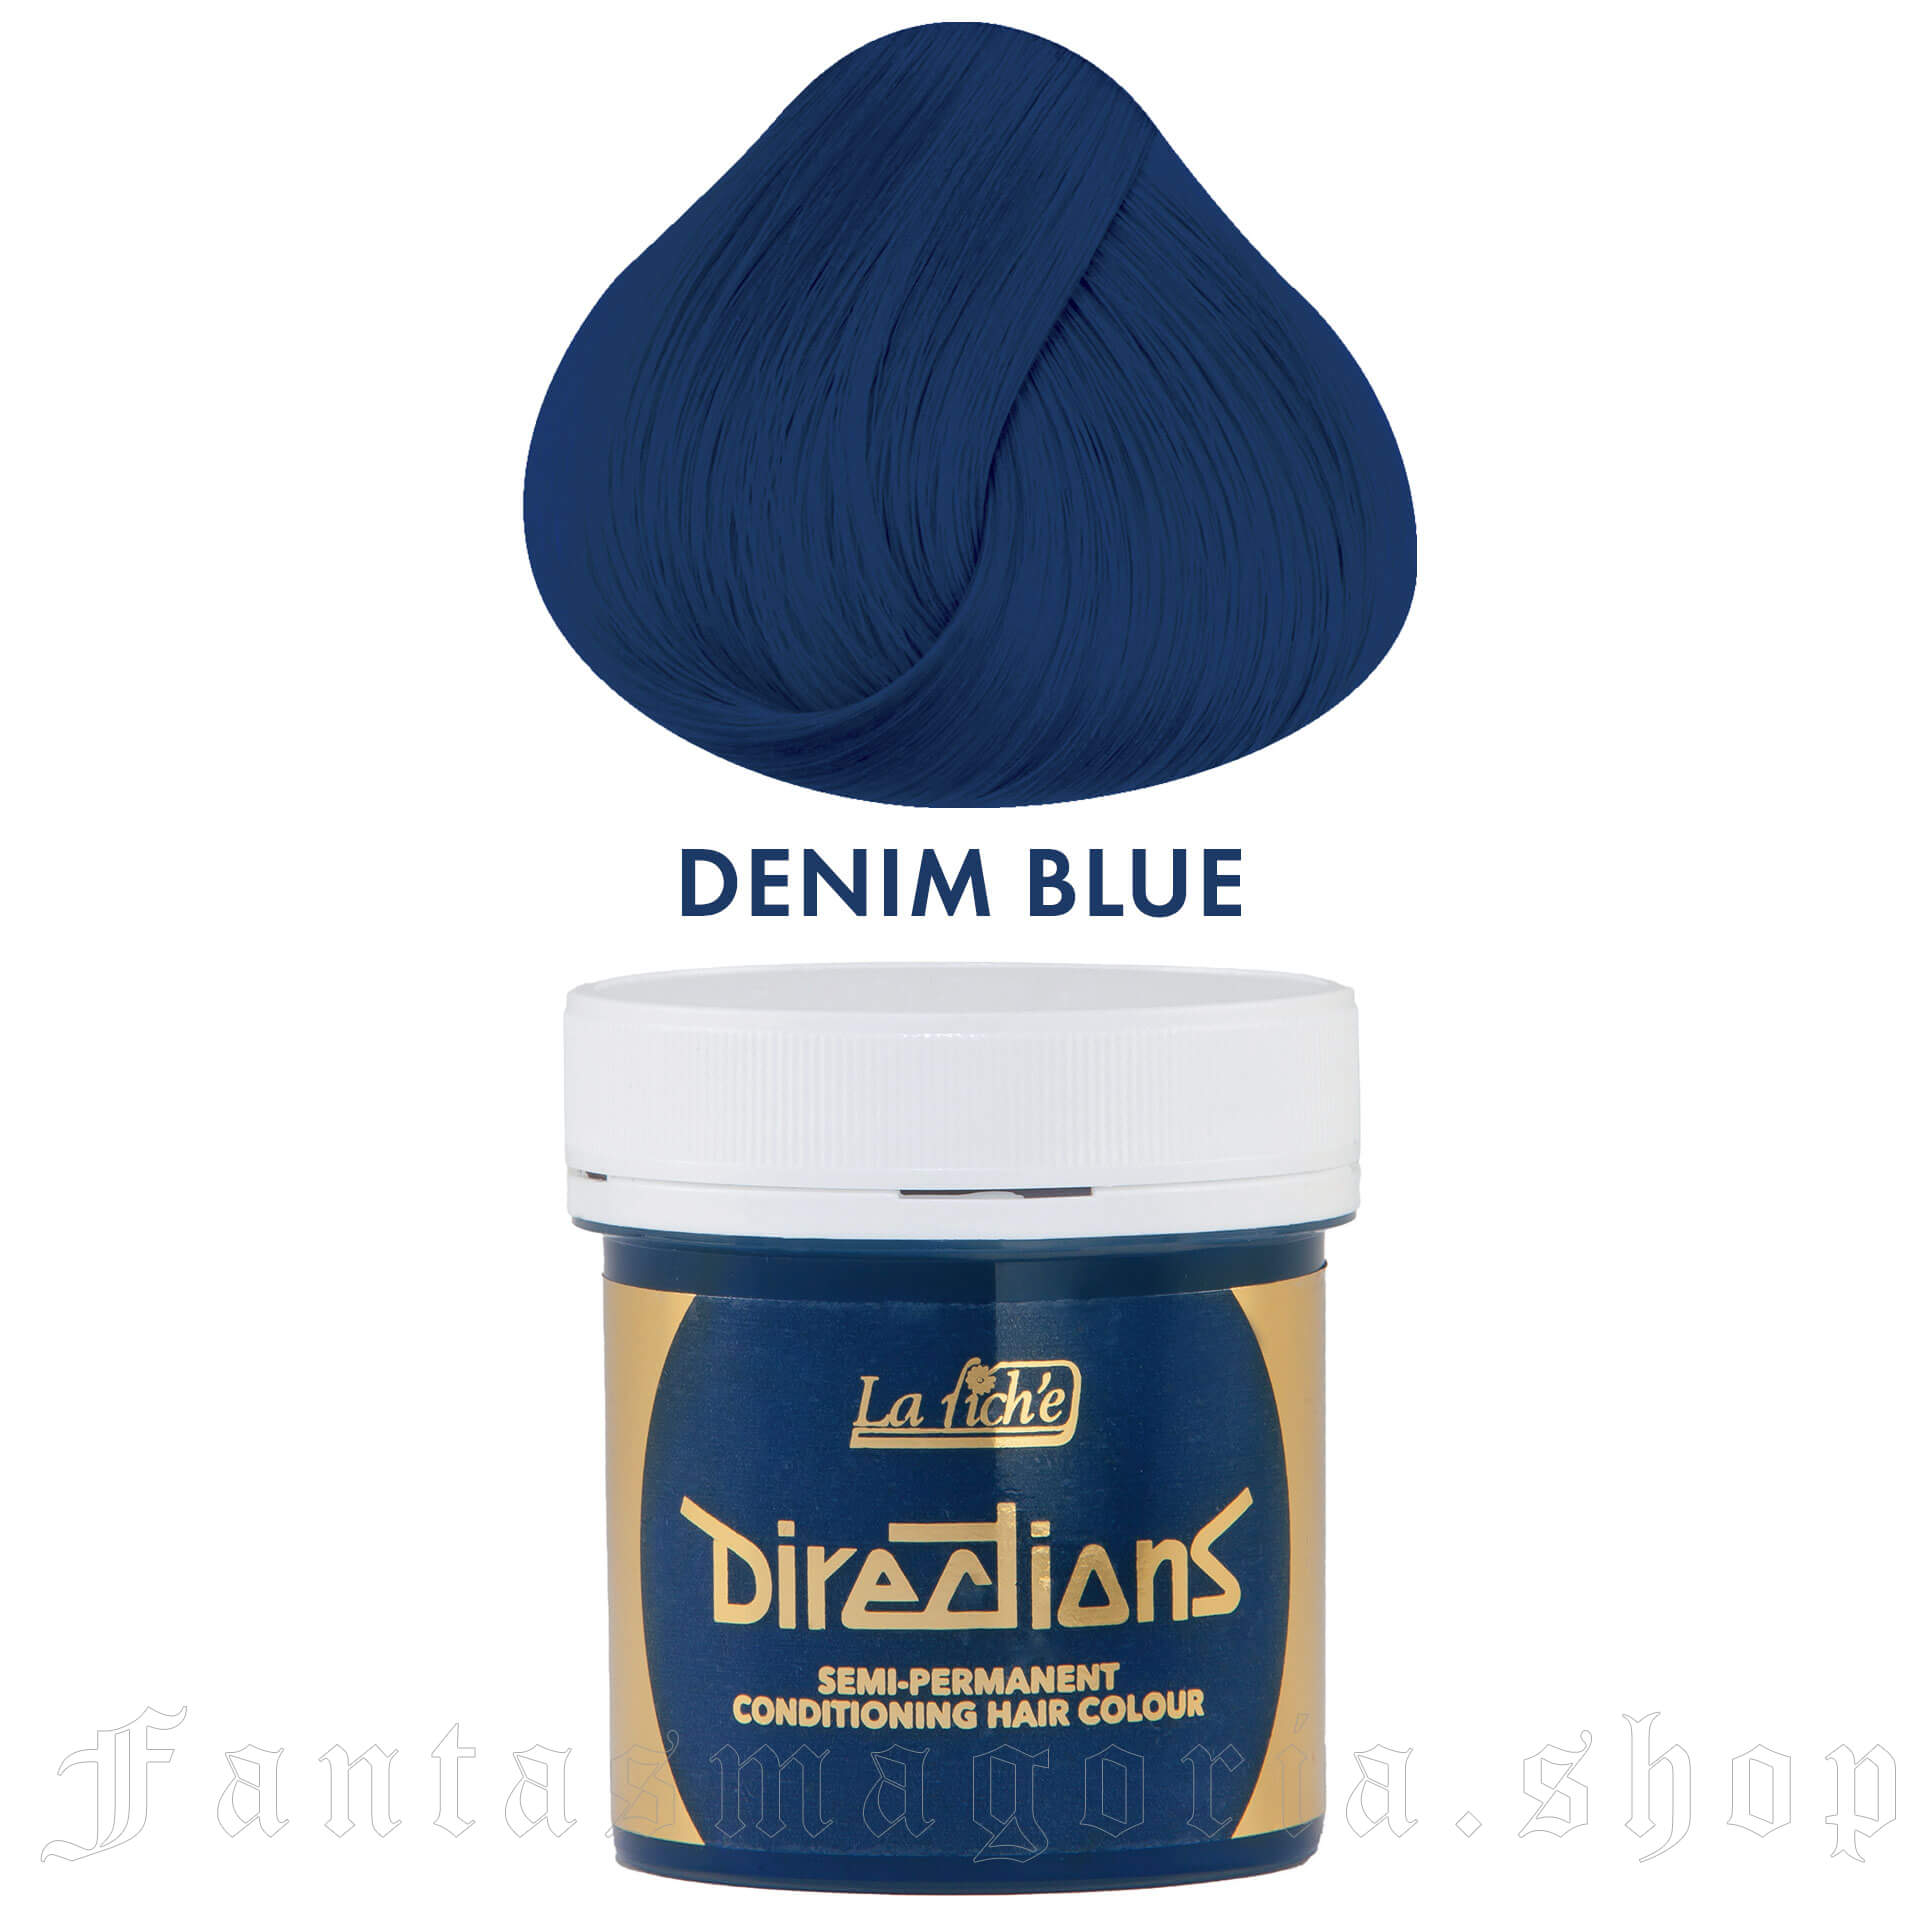 Denim Blue Hair Coloring Balsam - Directions - DIRECTTIONS/DENIM-BLUE 1